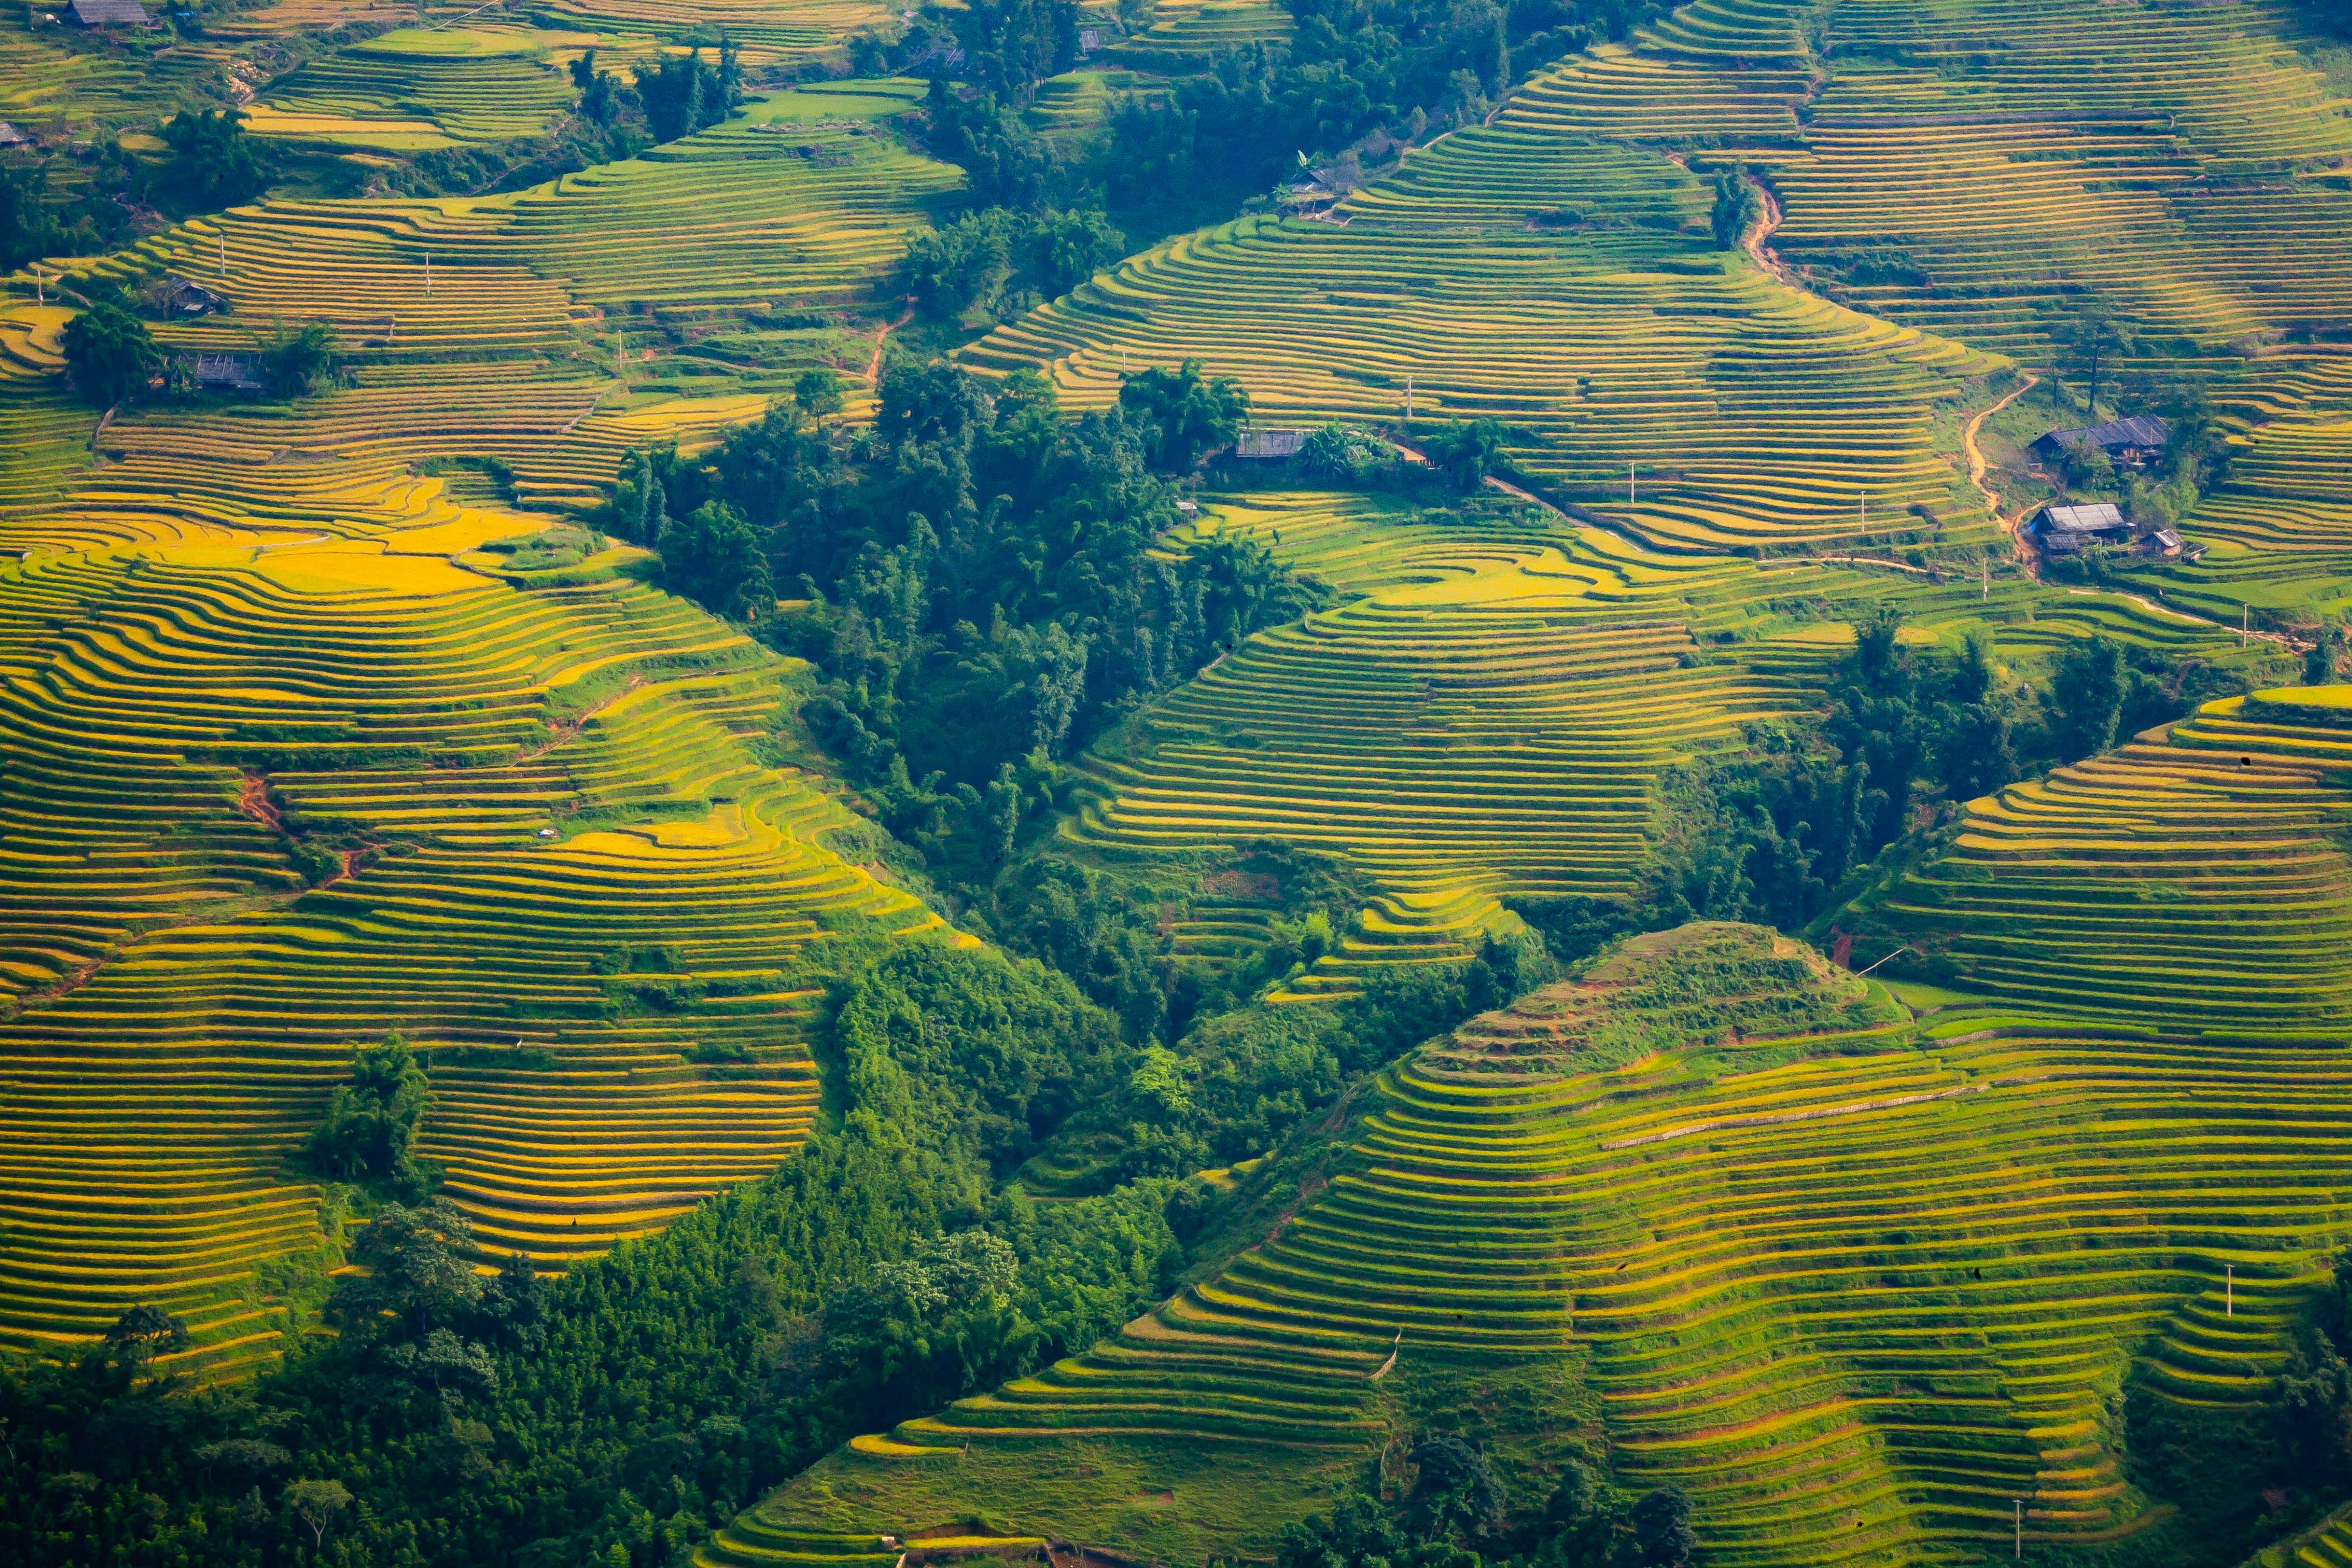 Vietnam, Lao Cai Prov, Terraces, 2008, IMG 8517